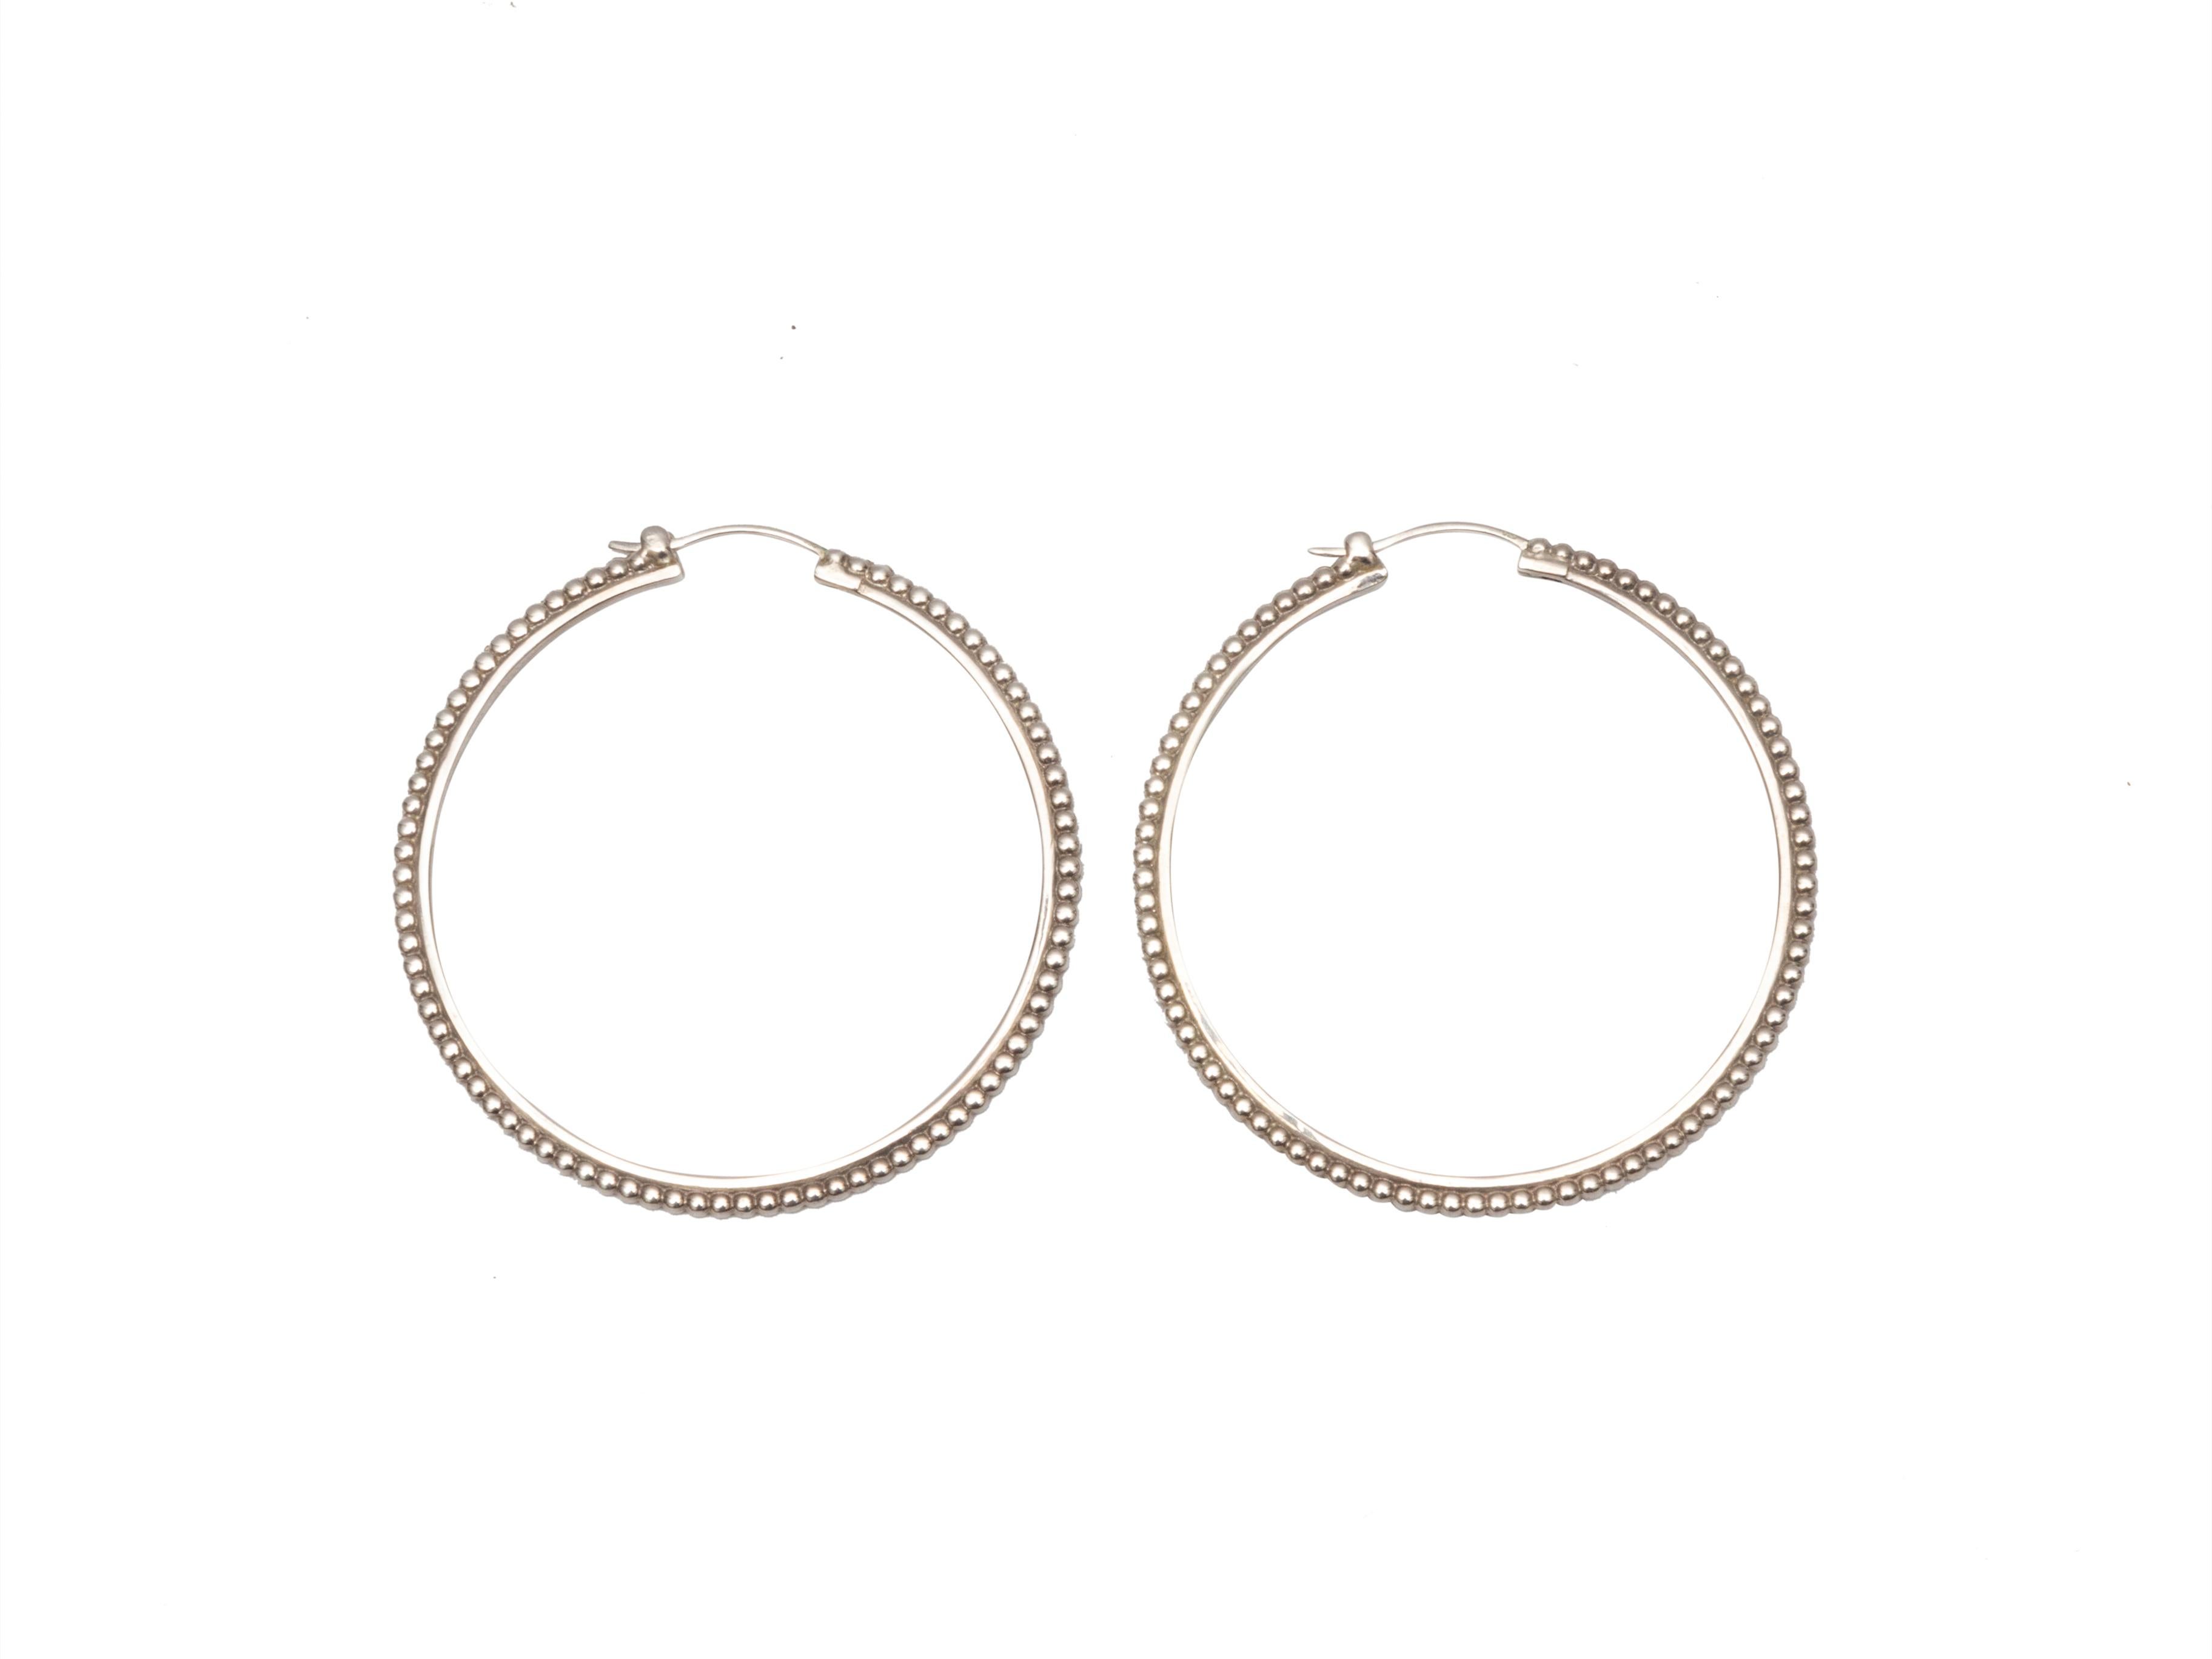 Product Details: Silver large pierced hoop earrings by Shinola. 2